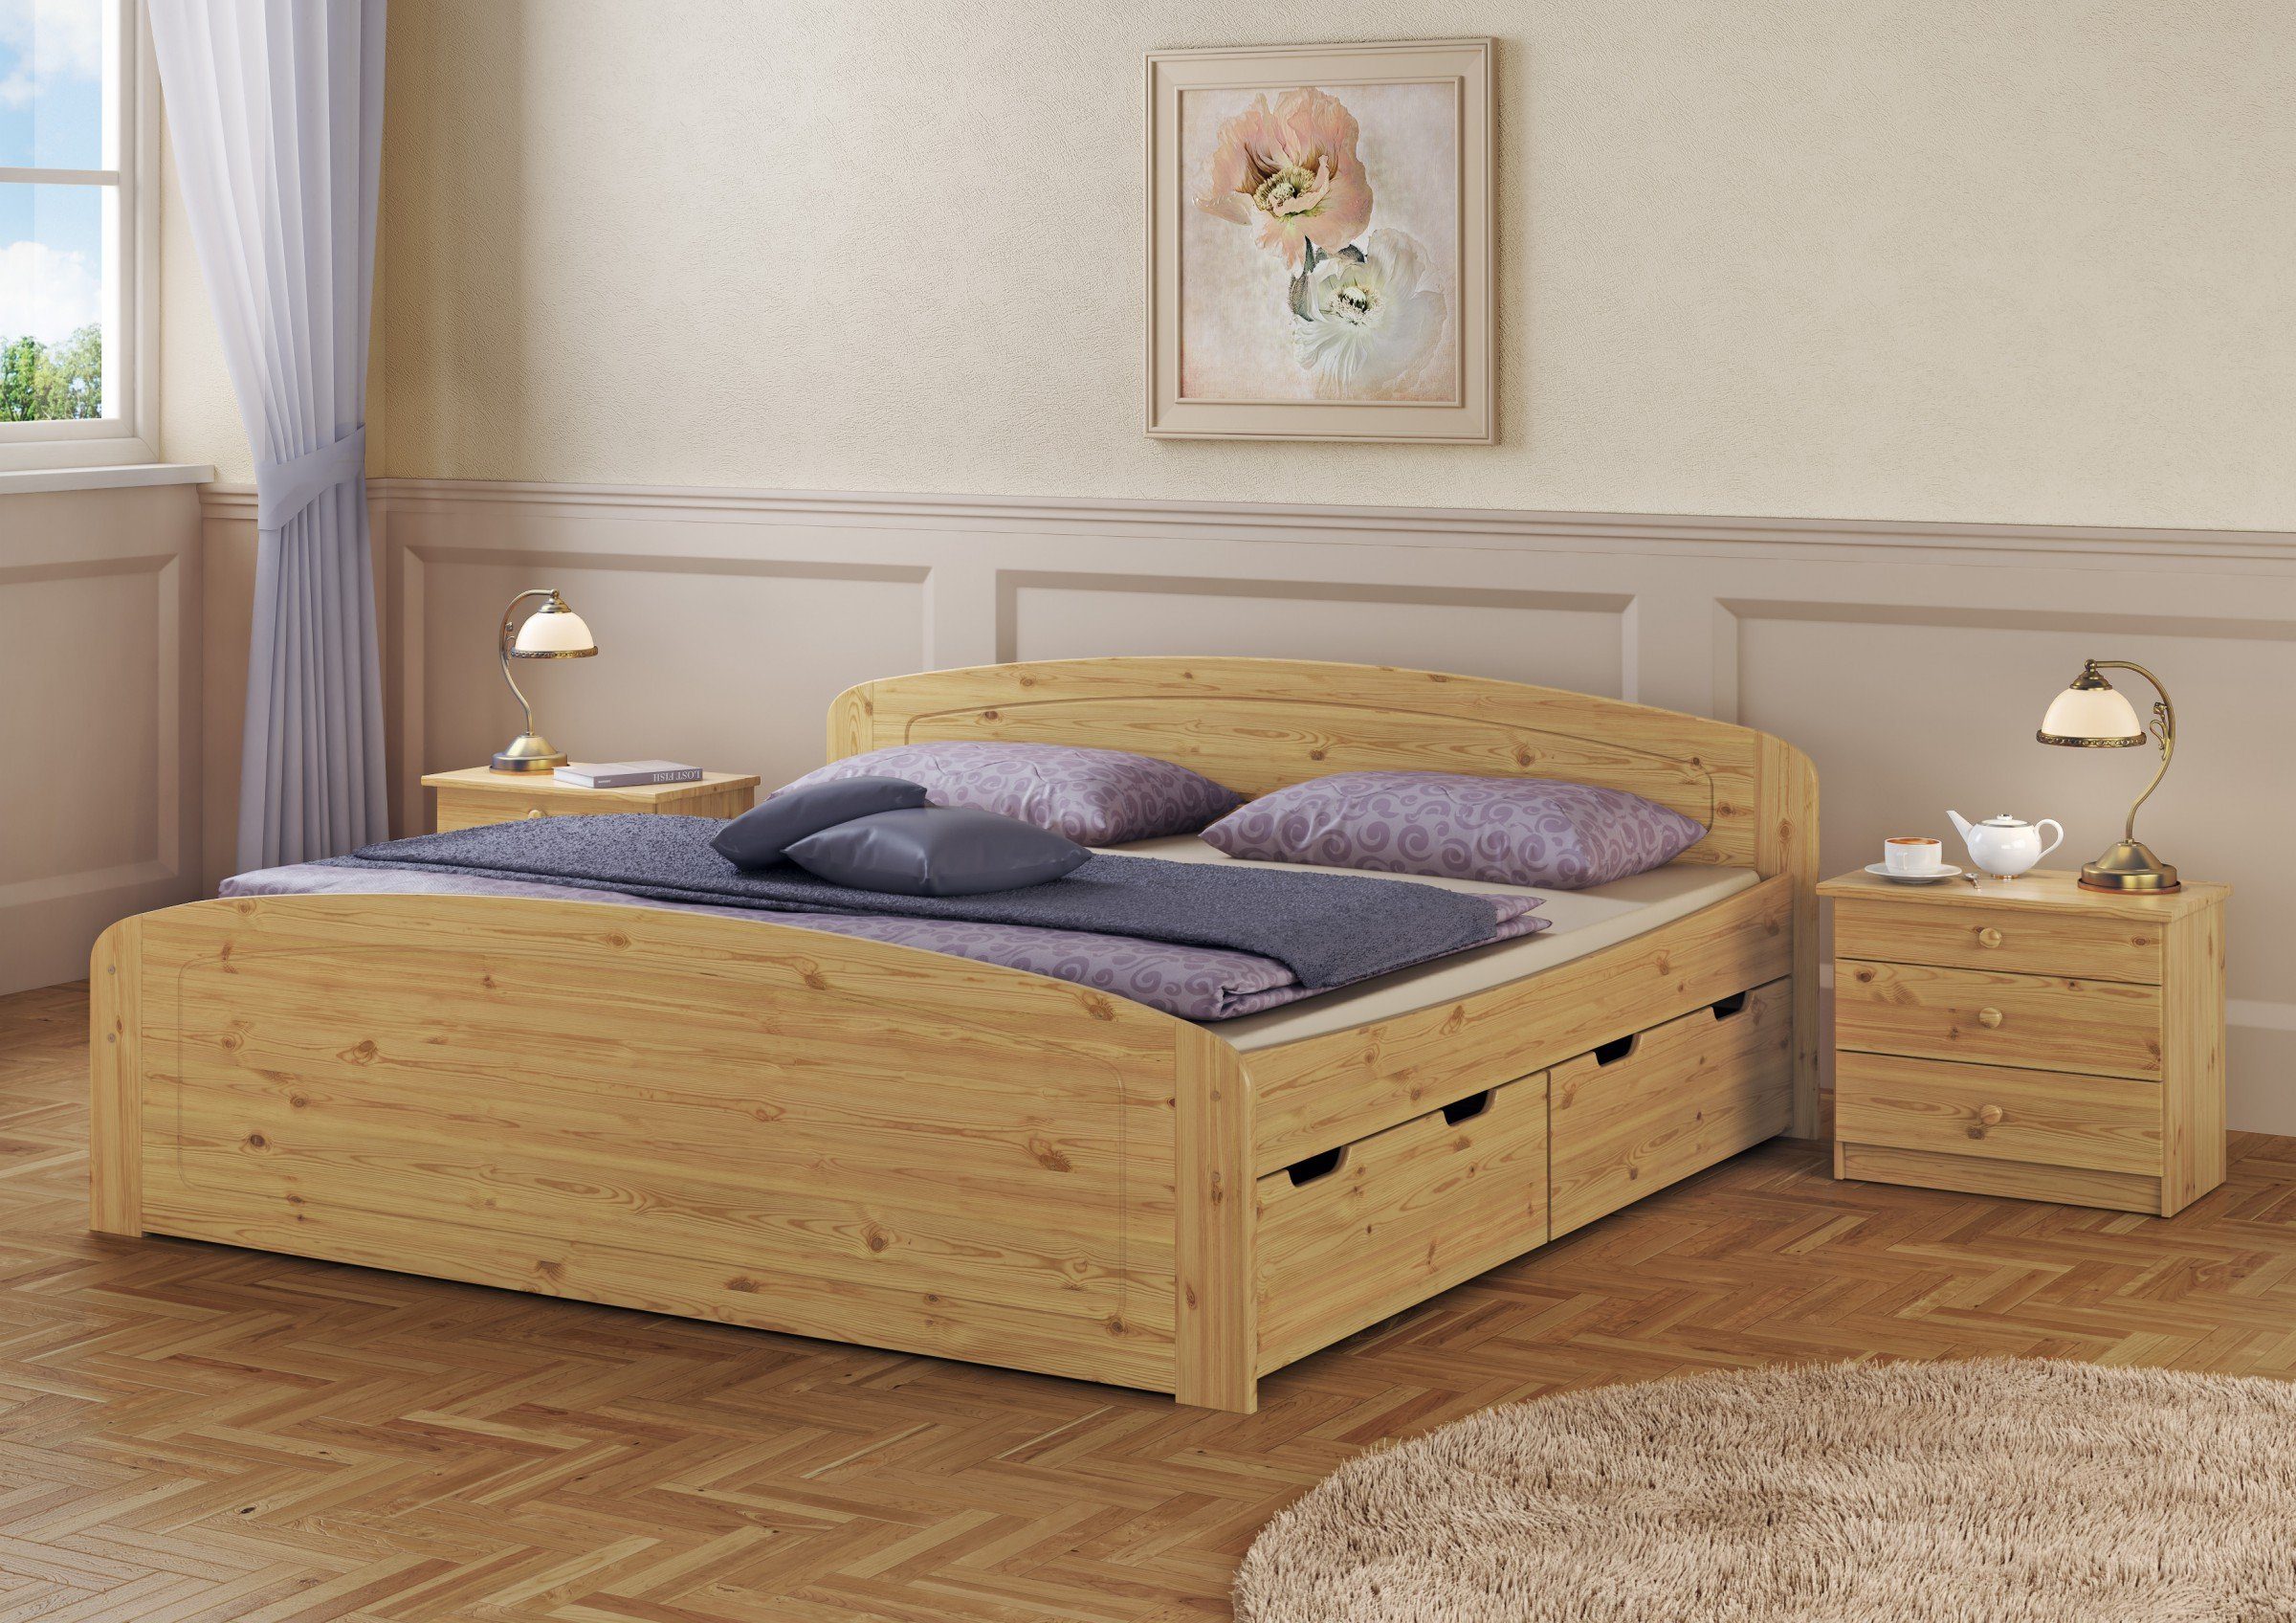 und Matratzen, Kieferfarblos Bett 2 Rollrost lackiert Kiefer mit Funktionsbett ERST-HOLZ 180x200